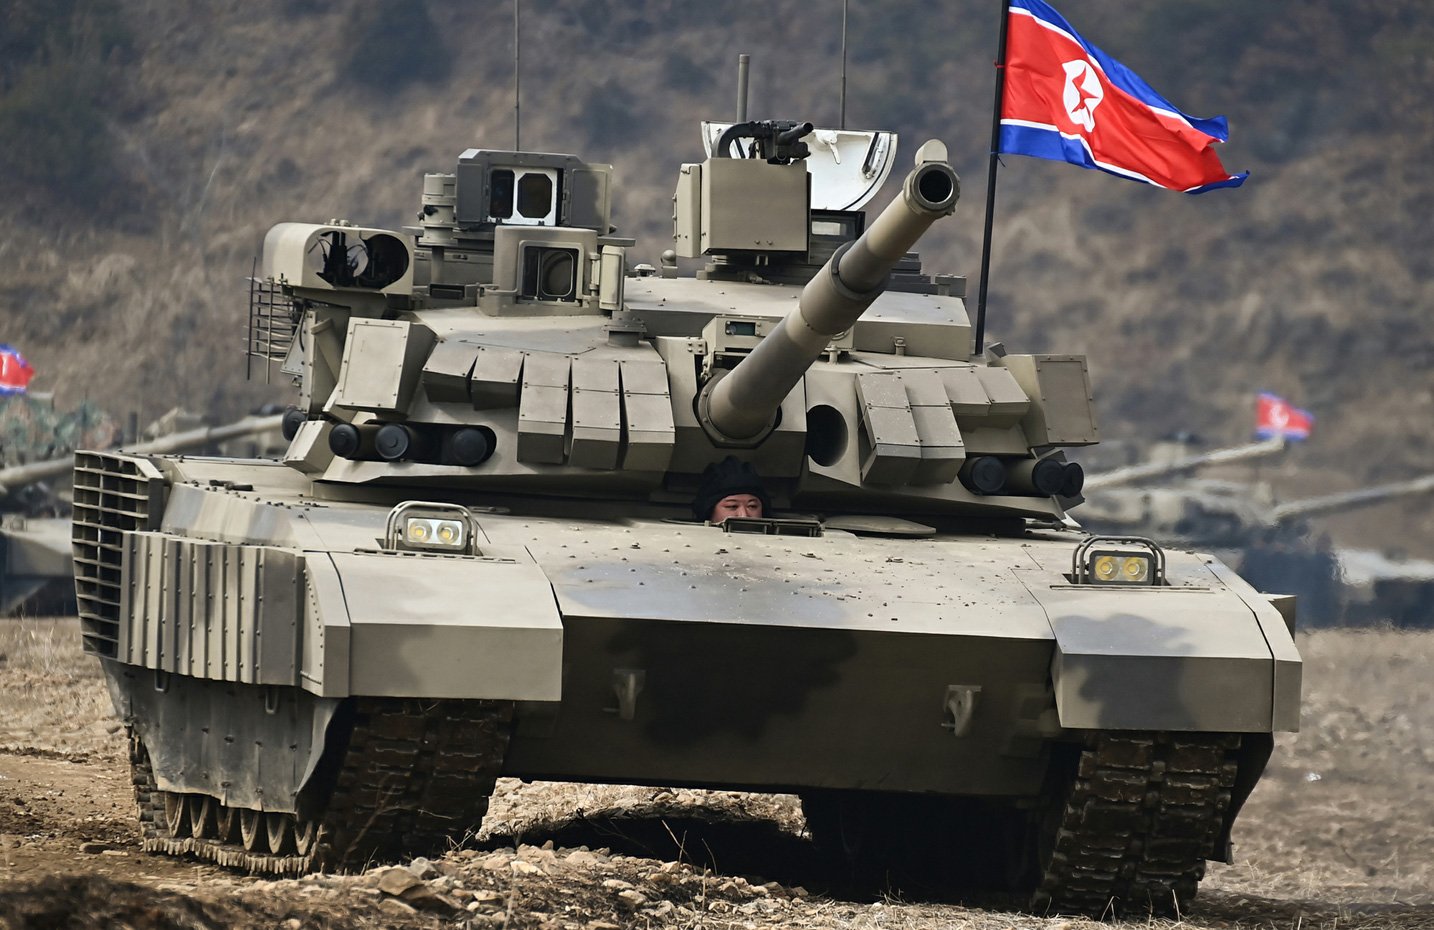 North Korea's new main battle tank